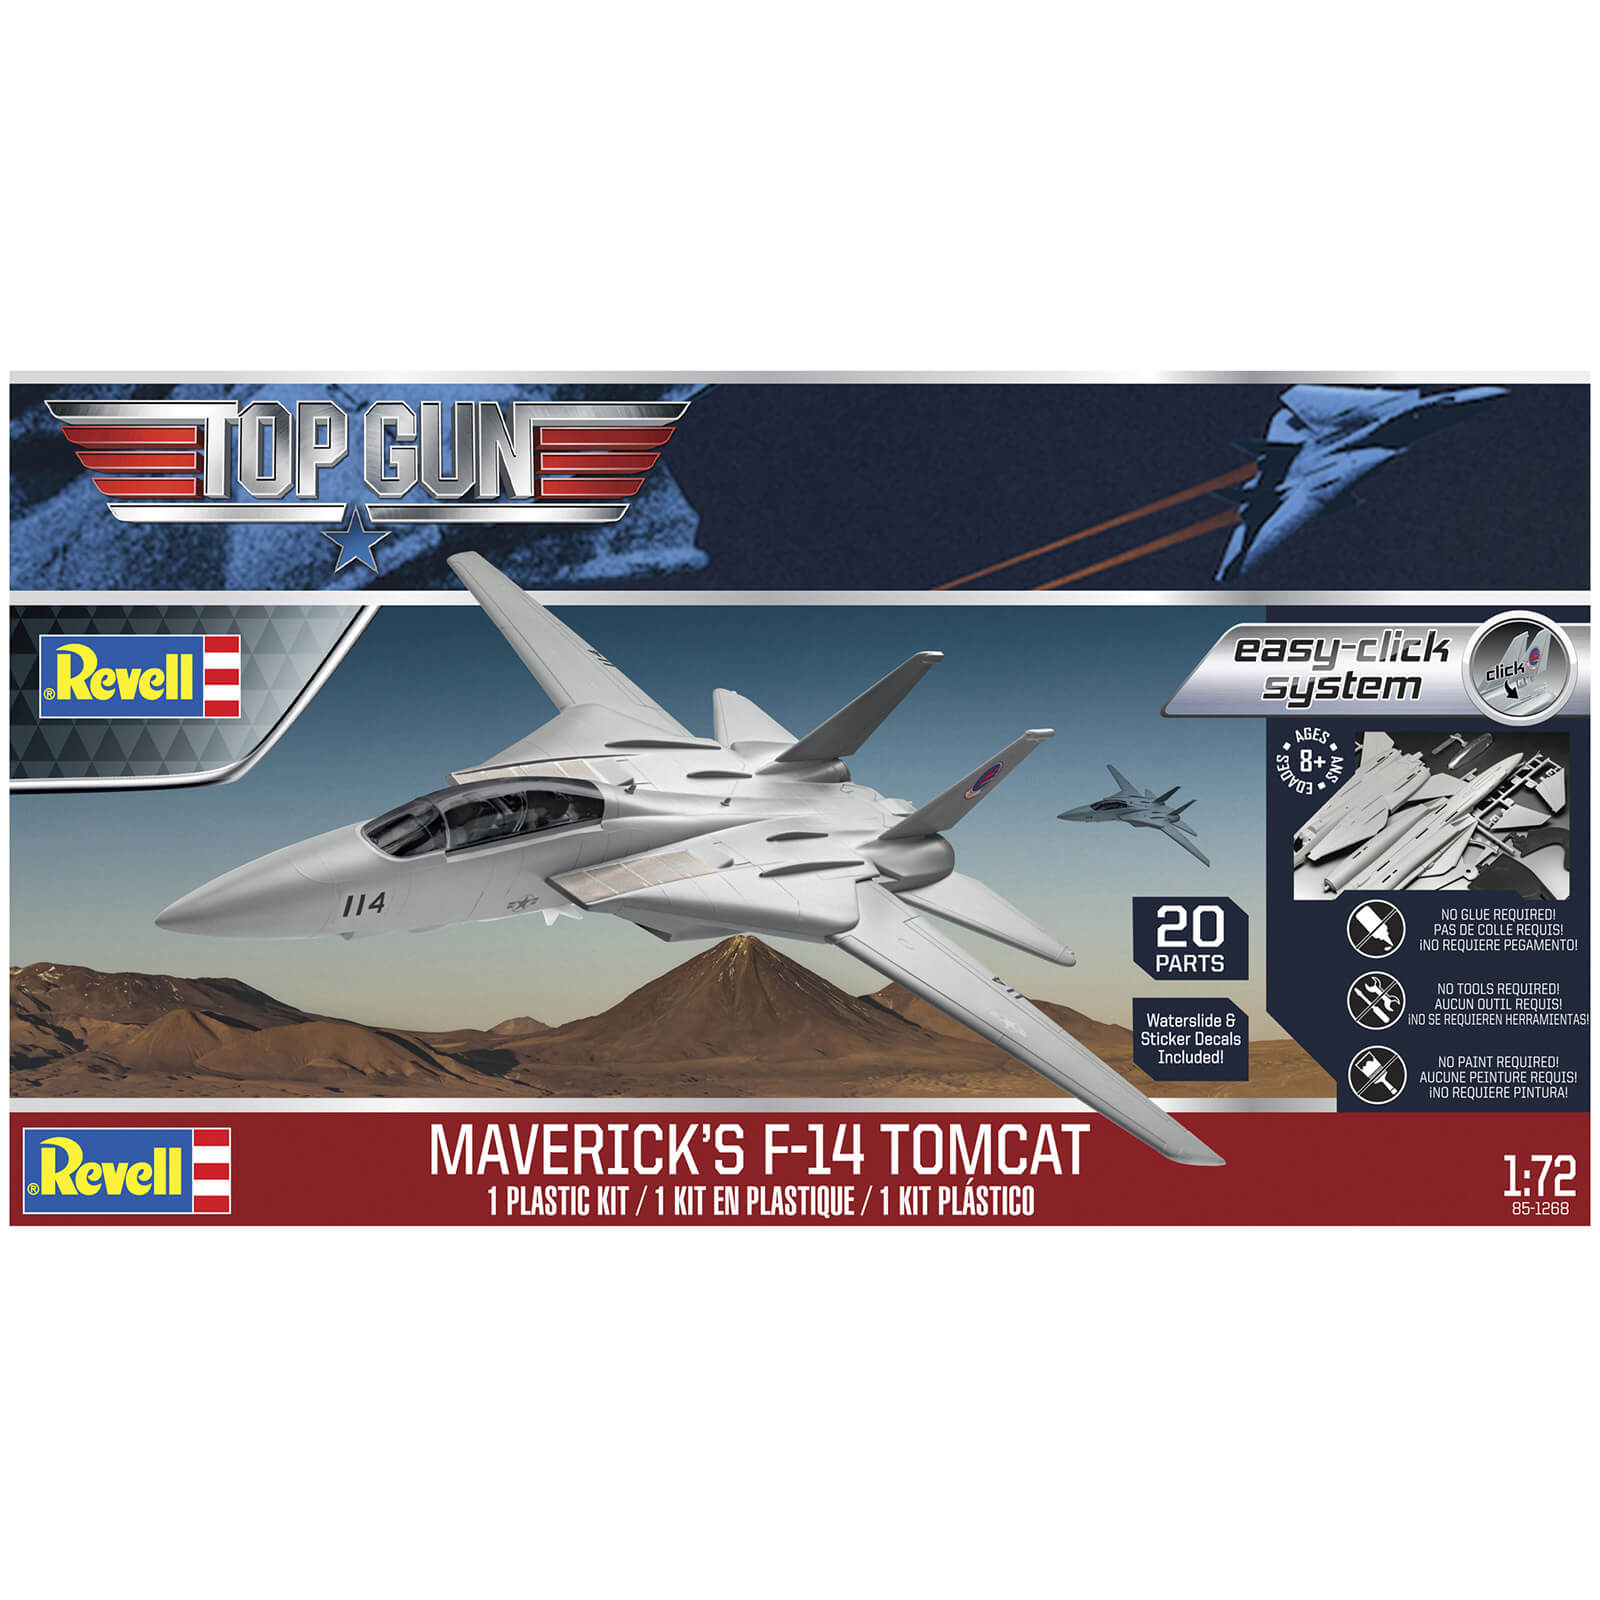 Top Gun - Maverick's F-14 Tomcat Easy Click Model Kit (1:72 Scale)